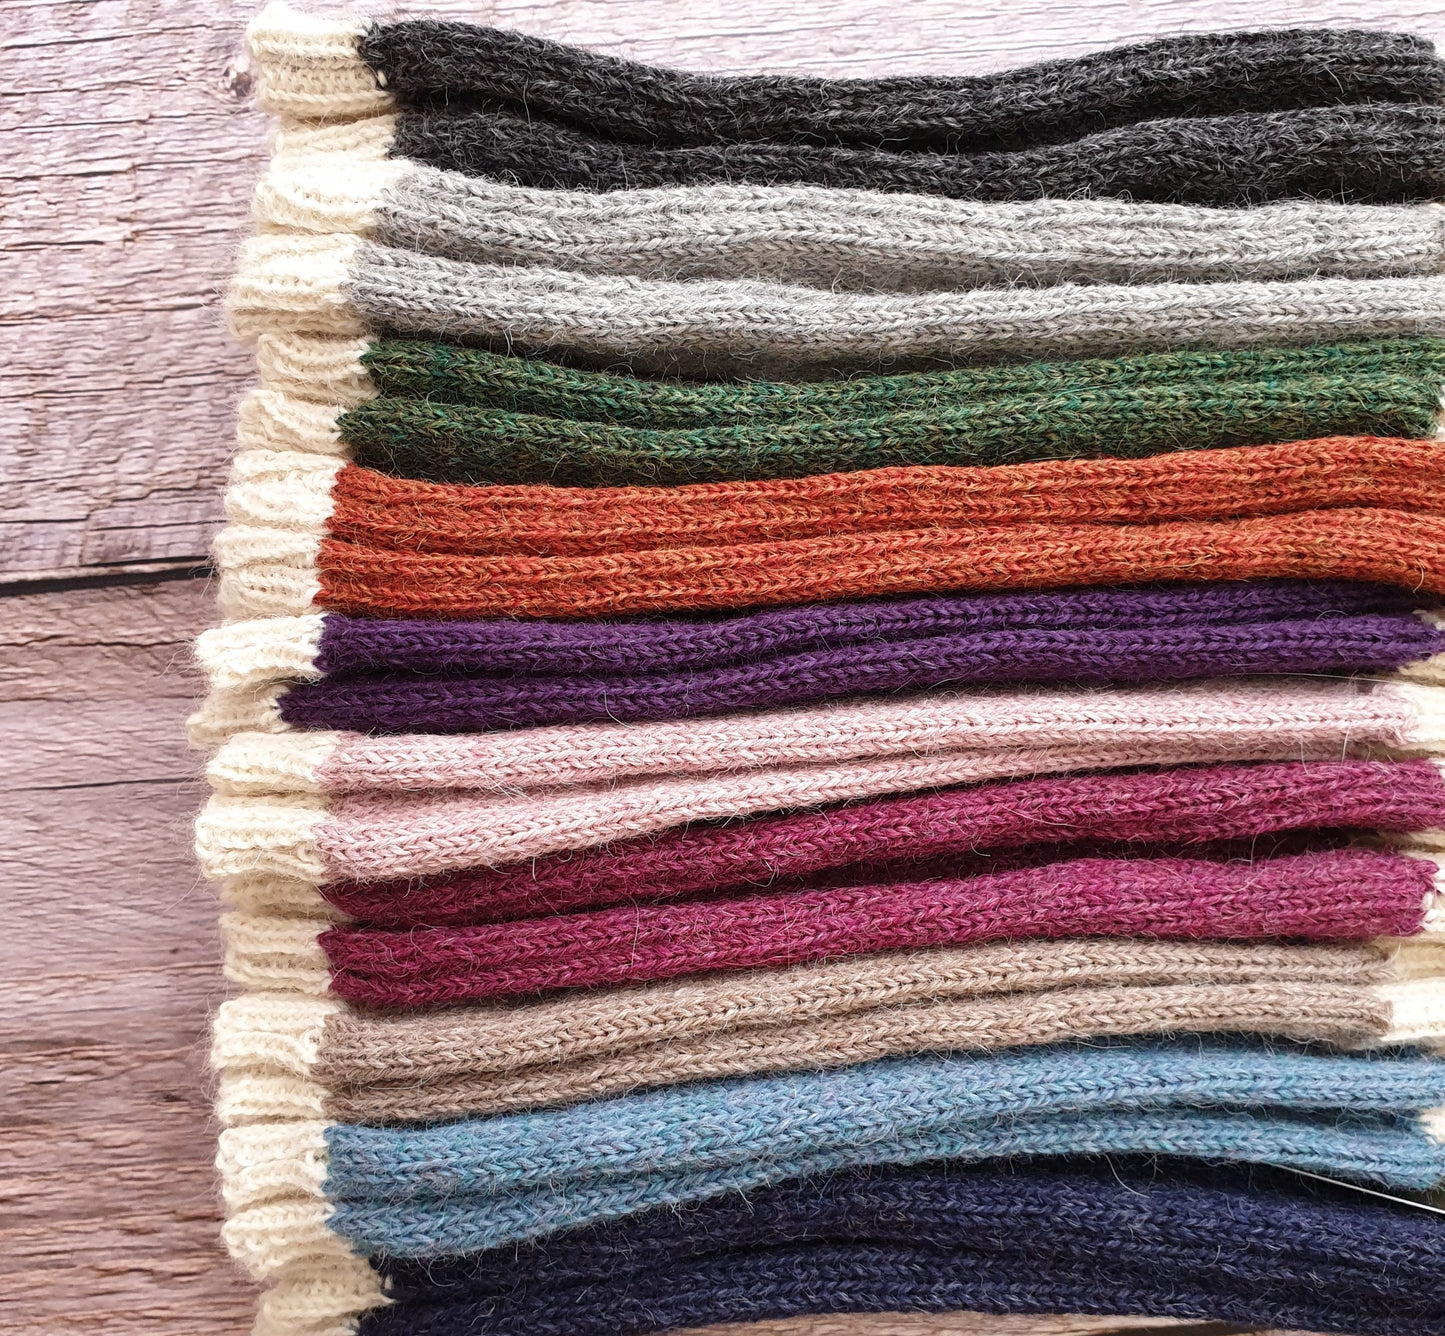 Fingerless Mittens Alpaca wool, Knitted Wrist warmers, Fair trade gloves, eco friendly woollen knit hand warmer natural fibres, plastic free